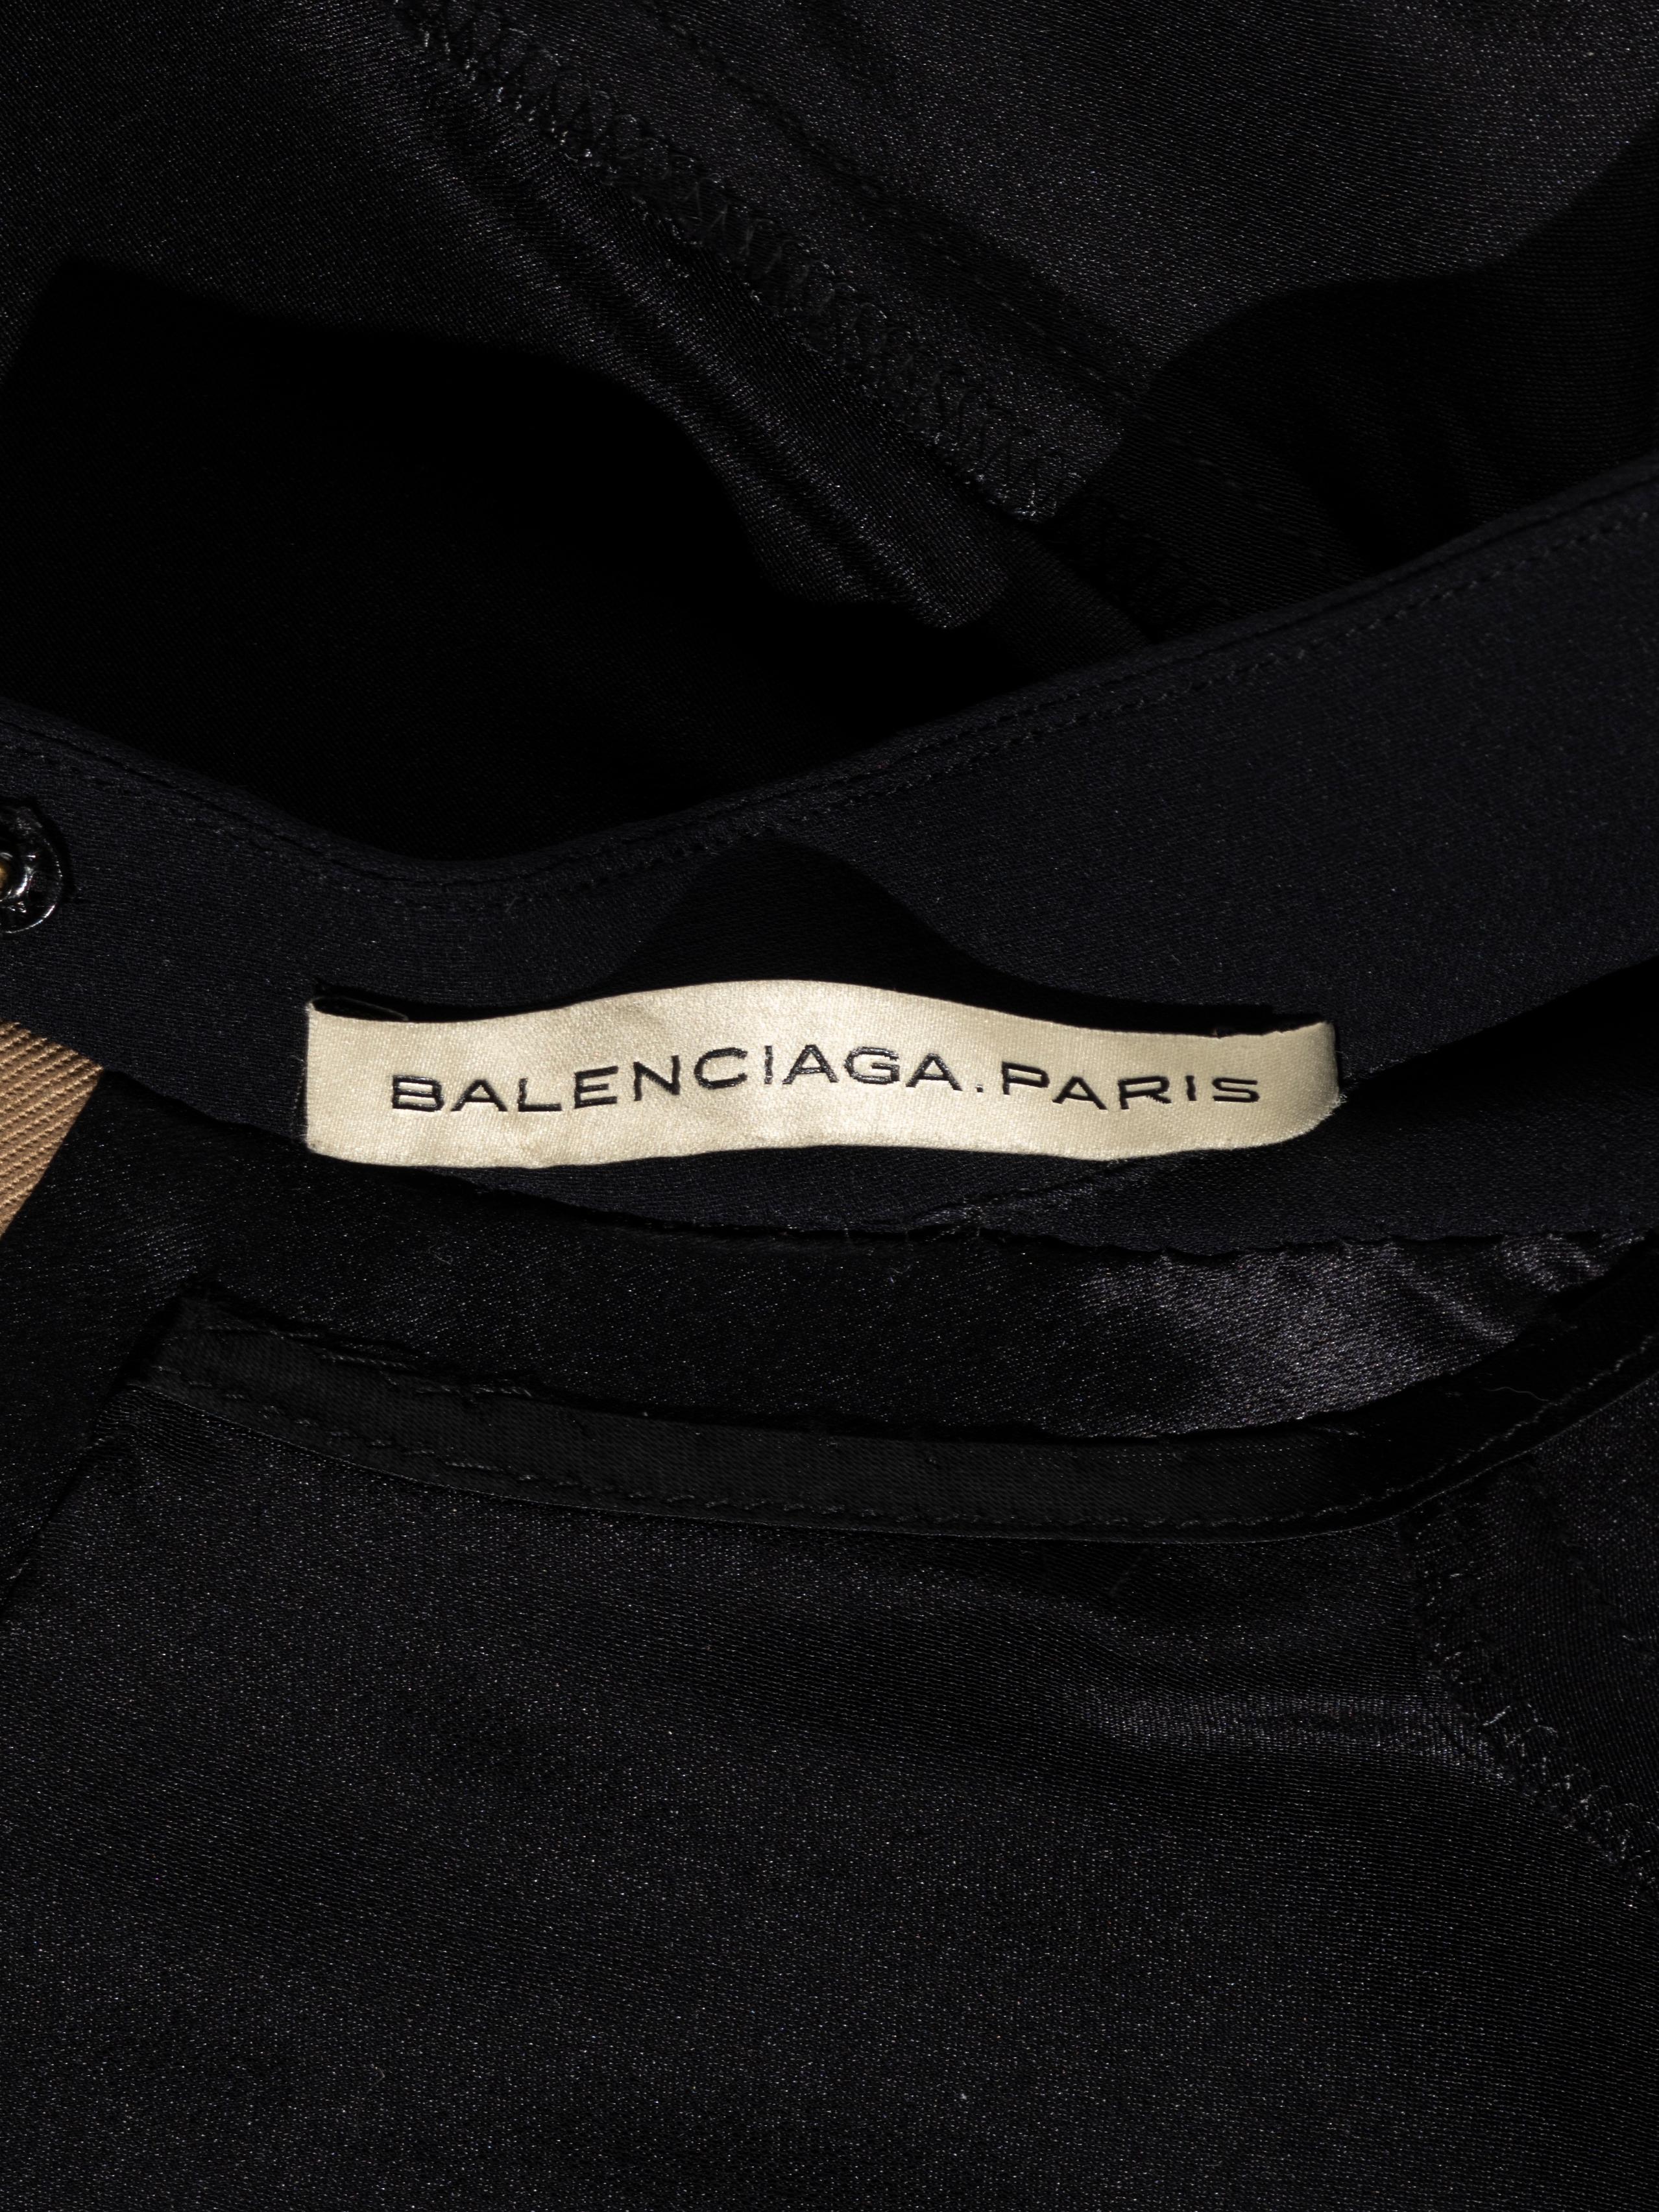 Balenciaga by Nicholas Ghesquière lurex fringe dress, ss 2012 7